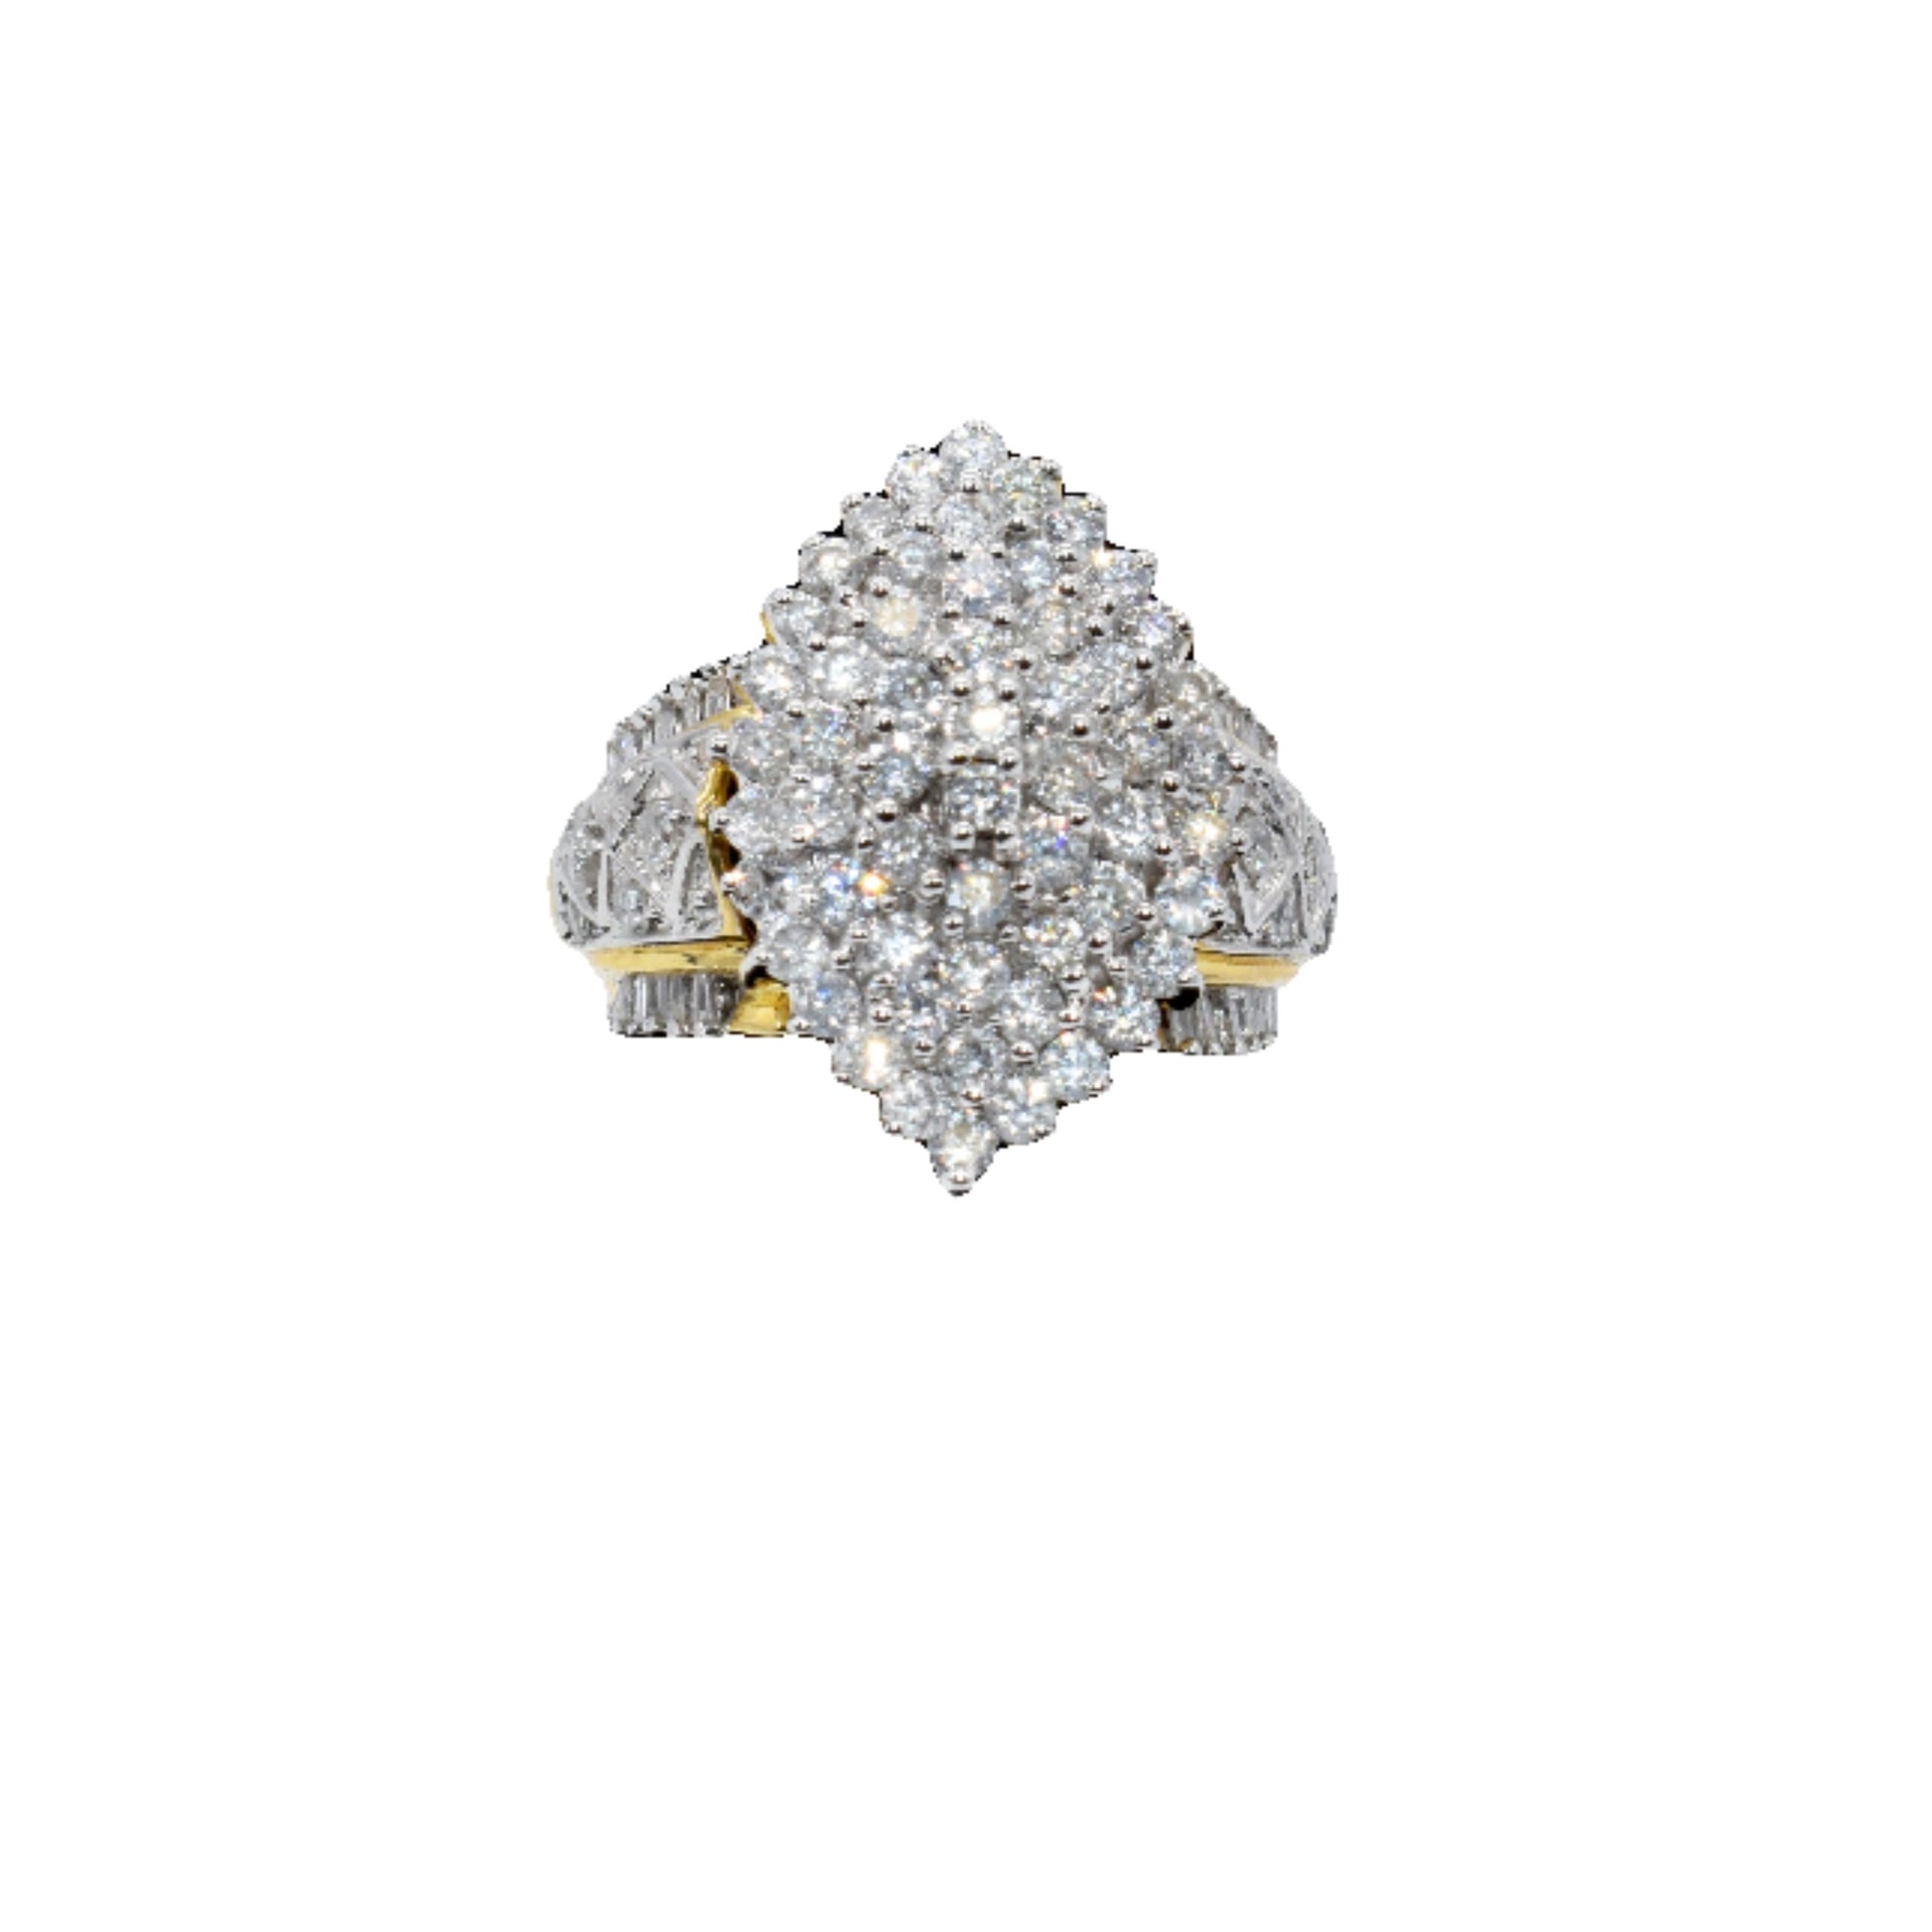 Engagement ring almond shape 10k Italian gold with diamonds. 